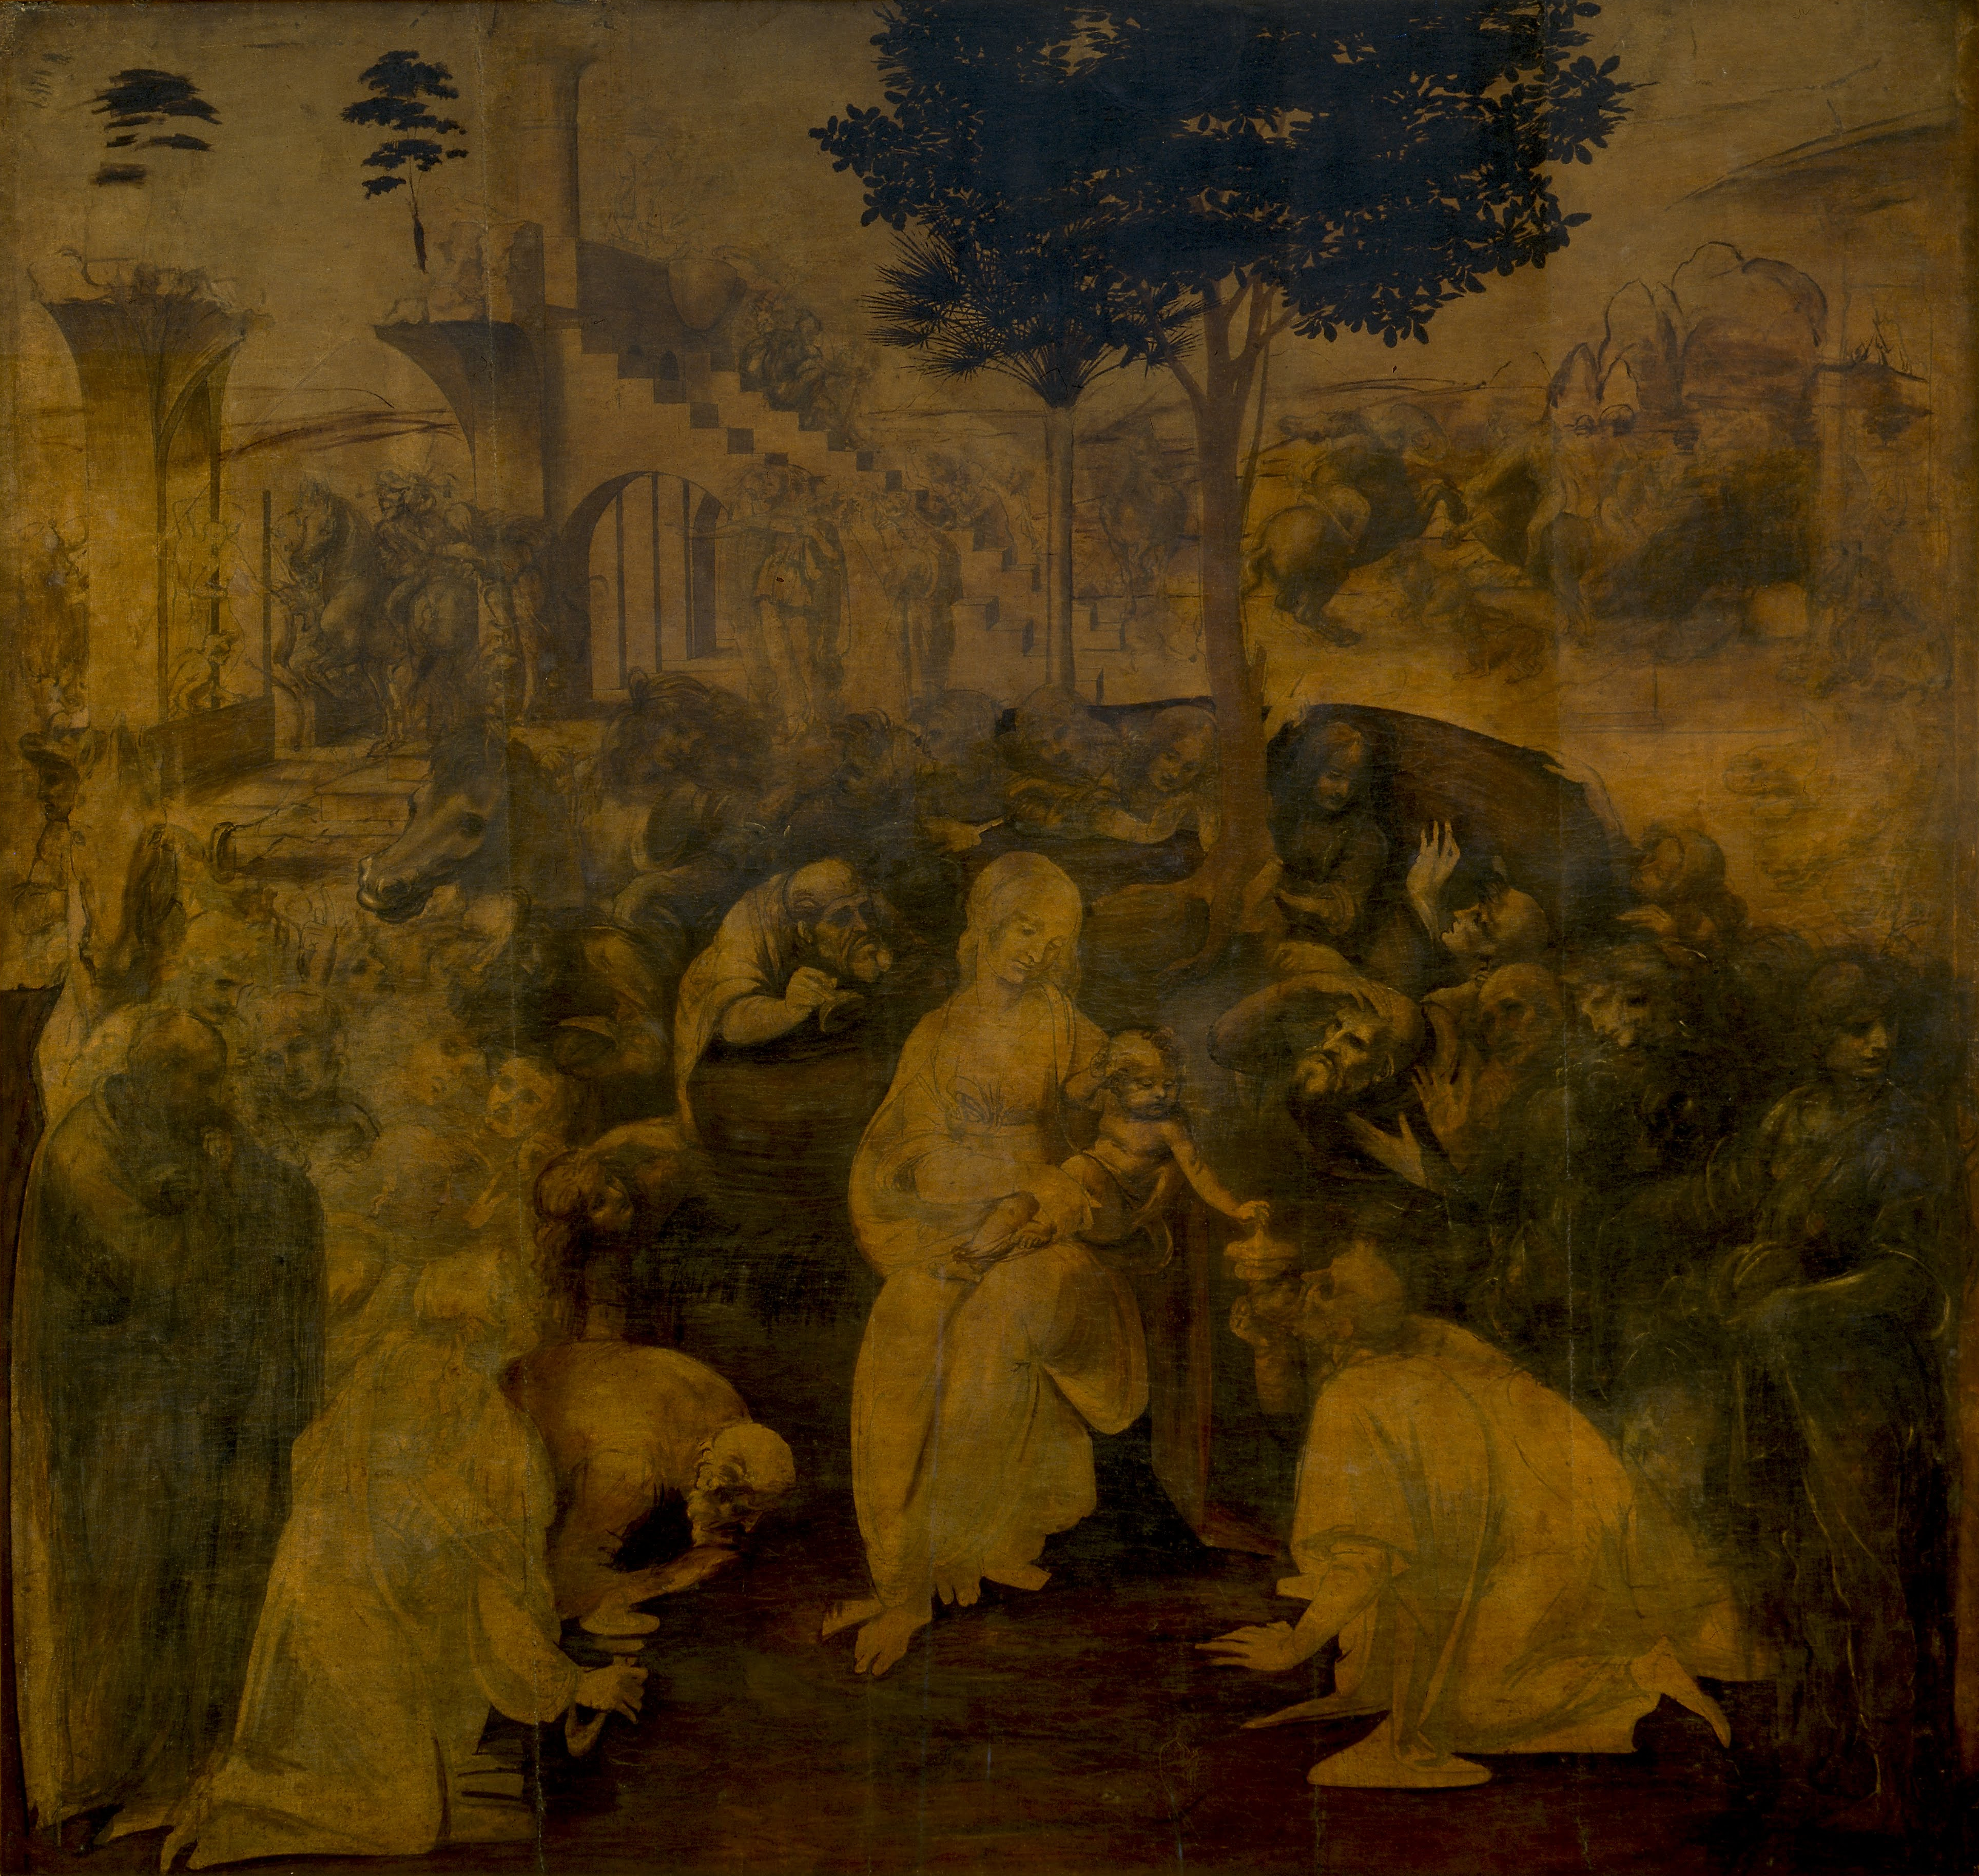 ADORATION OF THE MAGI, Leonardo da Vinci